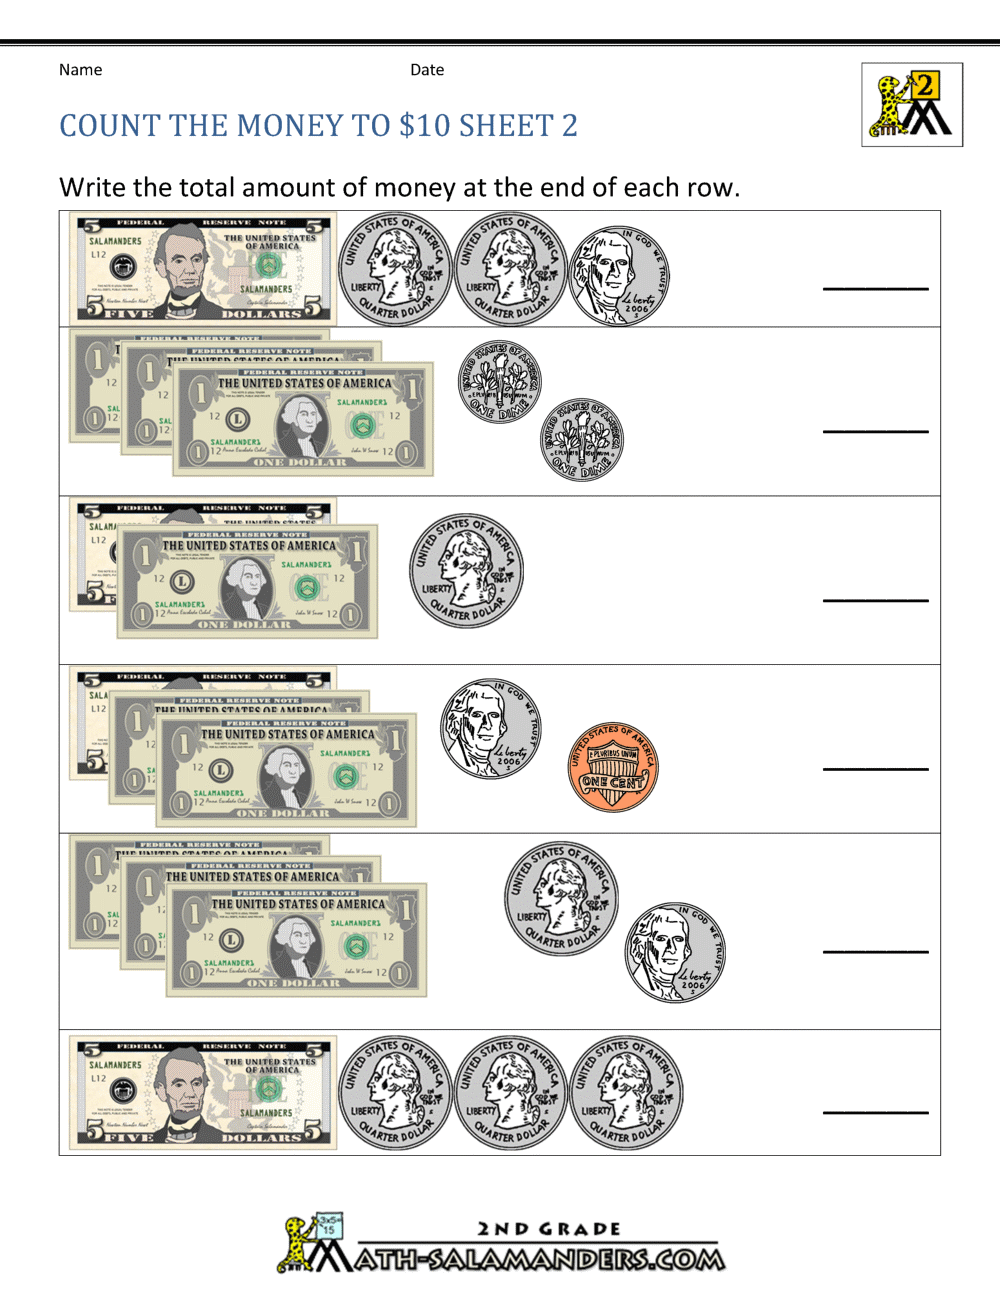 moneymoney pdf